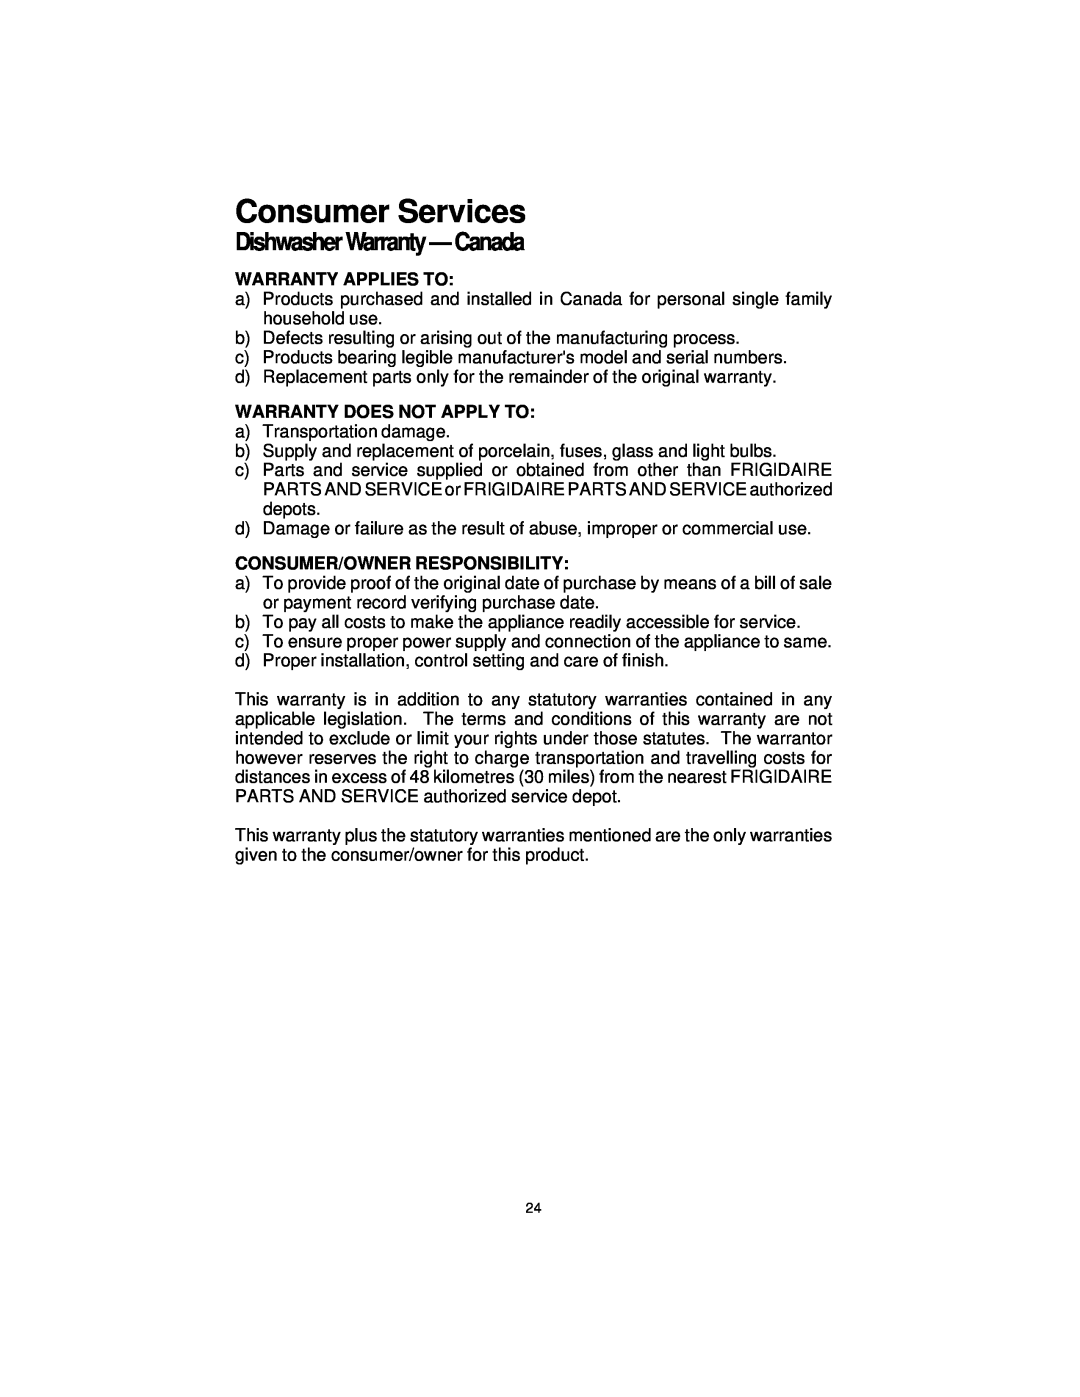 Frigidaire MDB100, F71C12 Dishwasher Warranty - Canada, Consumer Services, Warranty Applies To, Warranty Does Not Apply To 